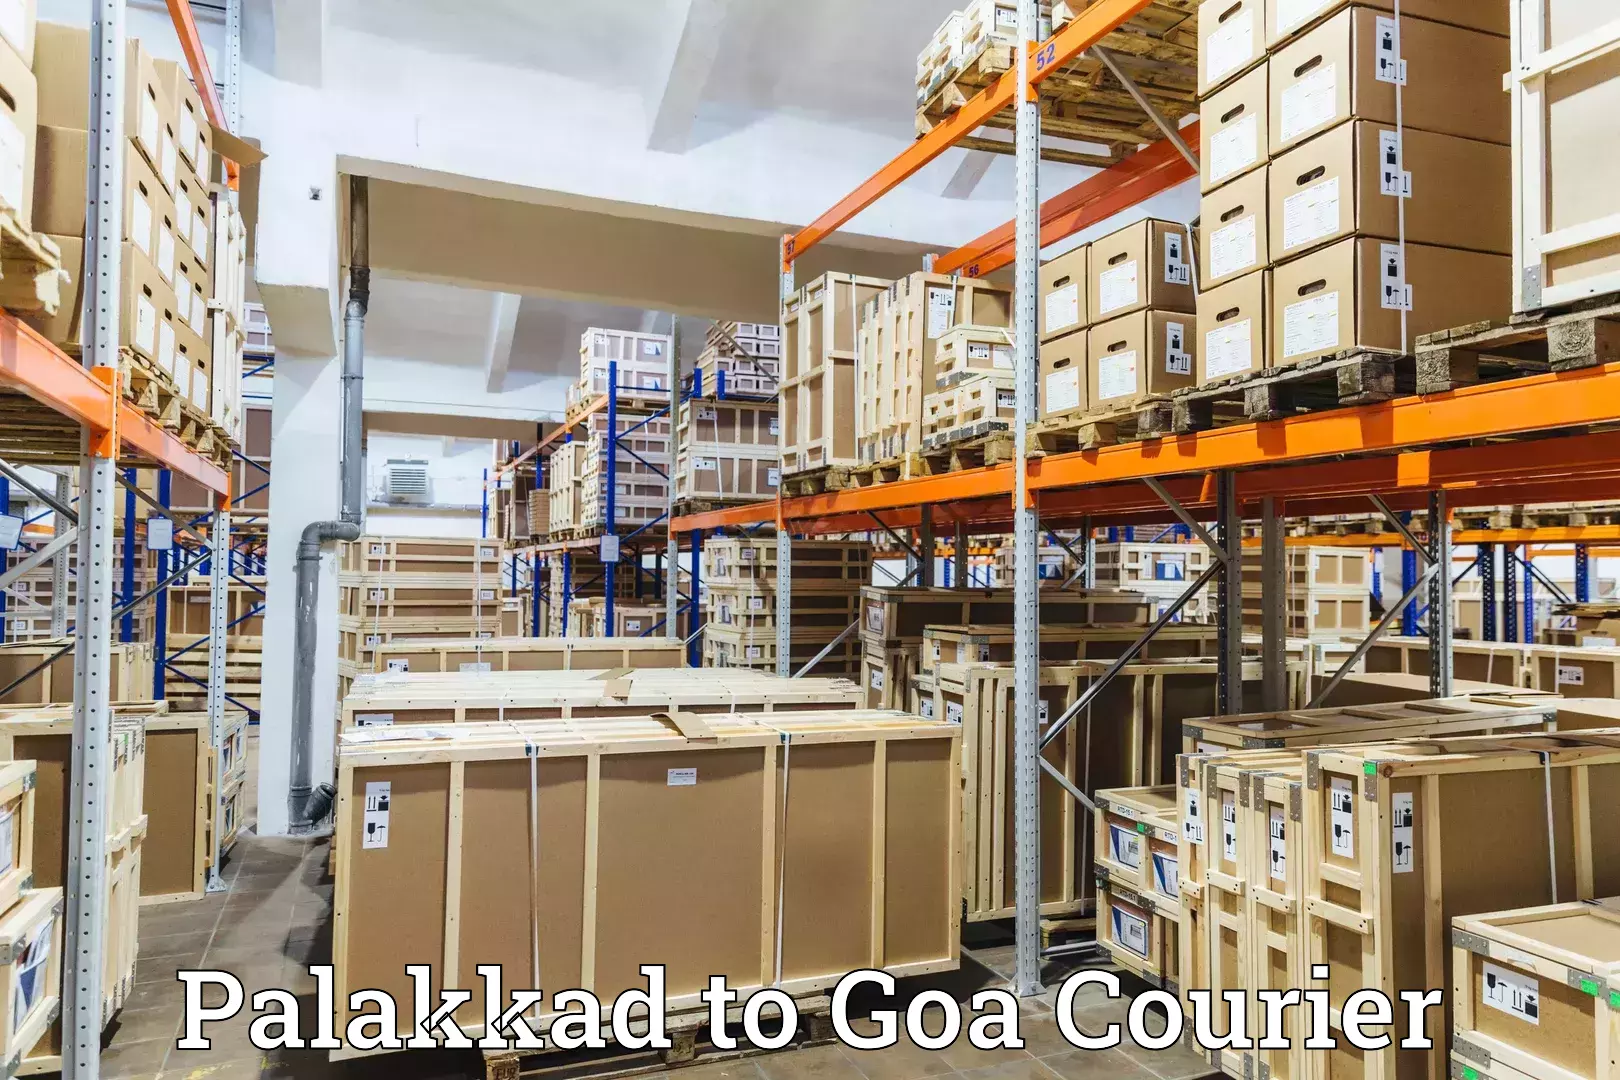 Courier service comparison Palakkad to Vasco da Gama